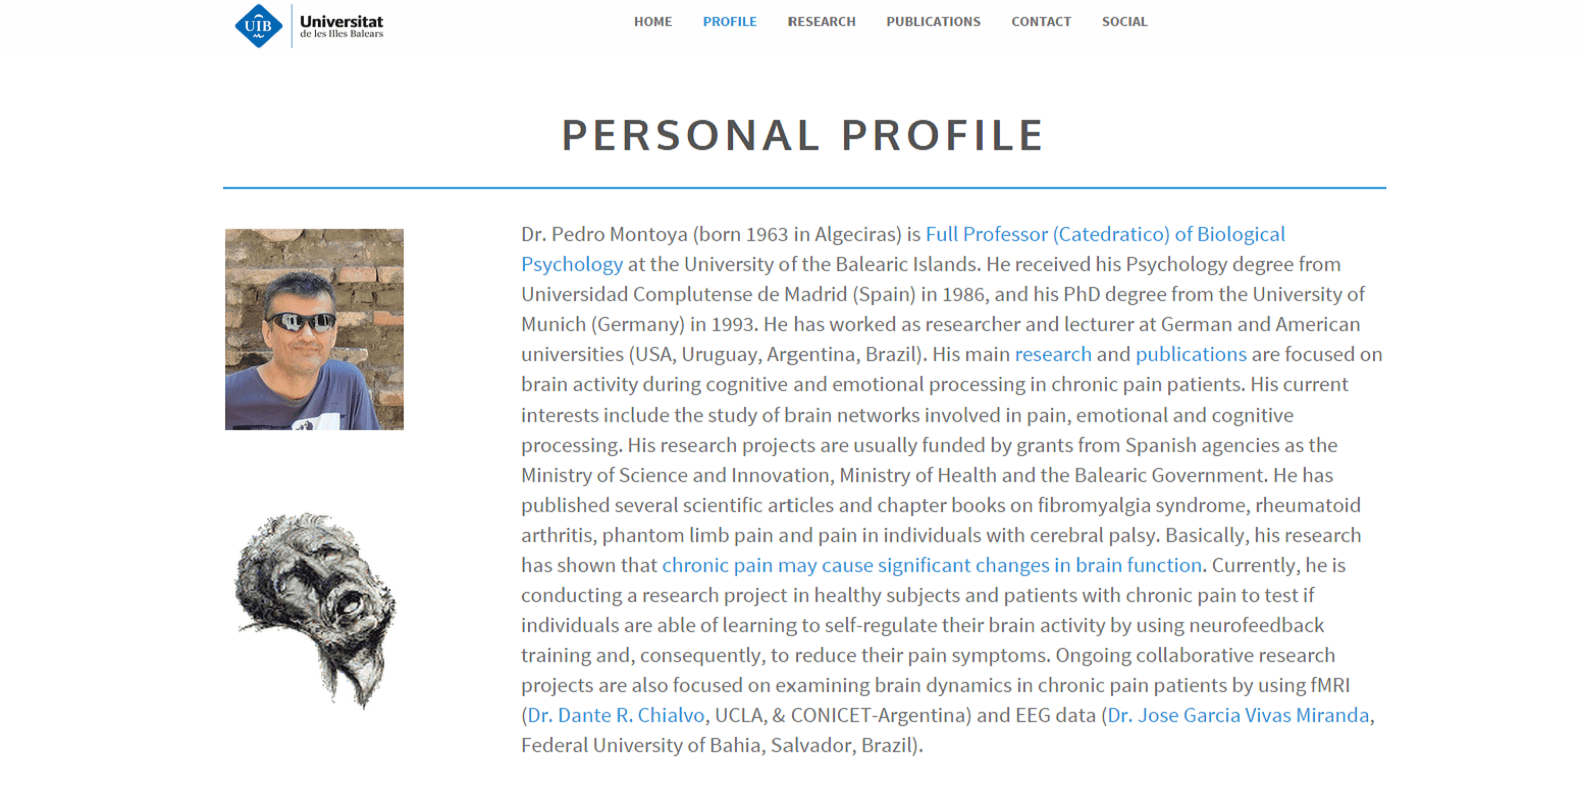 Pedro Montoya's Personal Profile